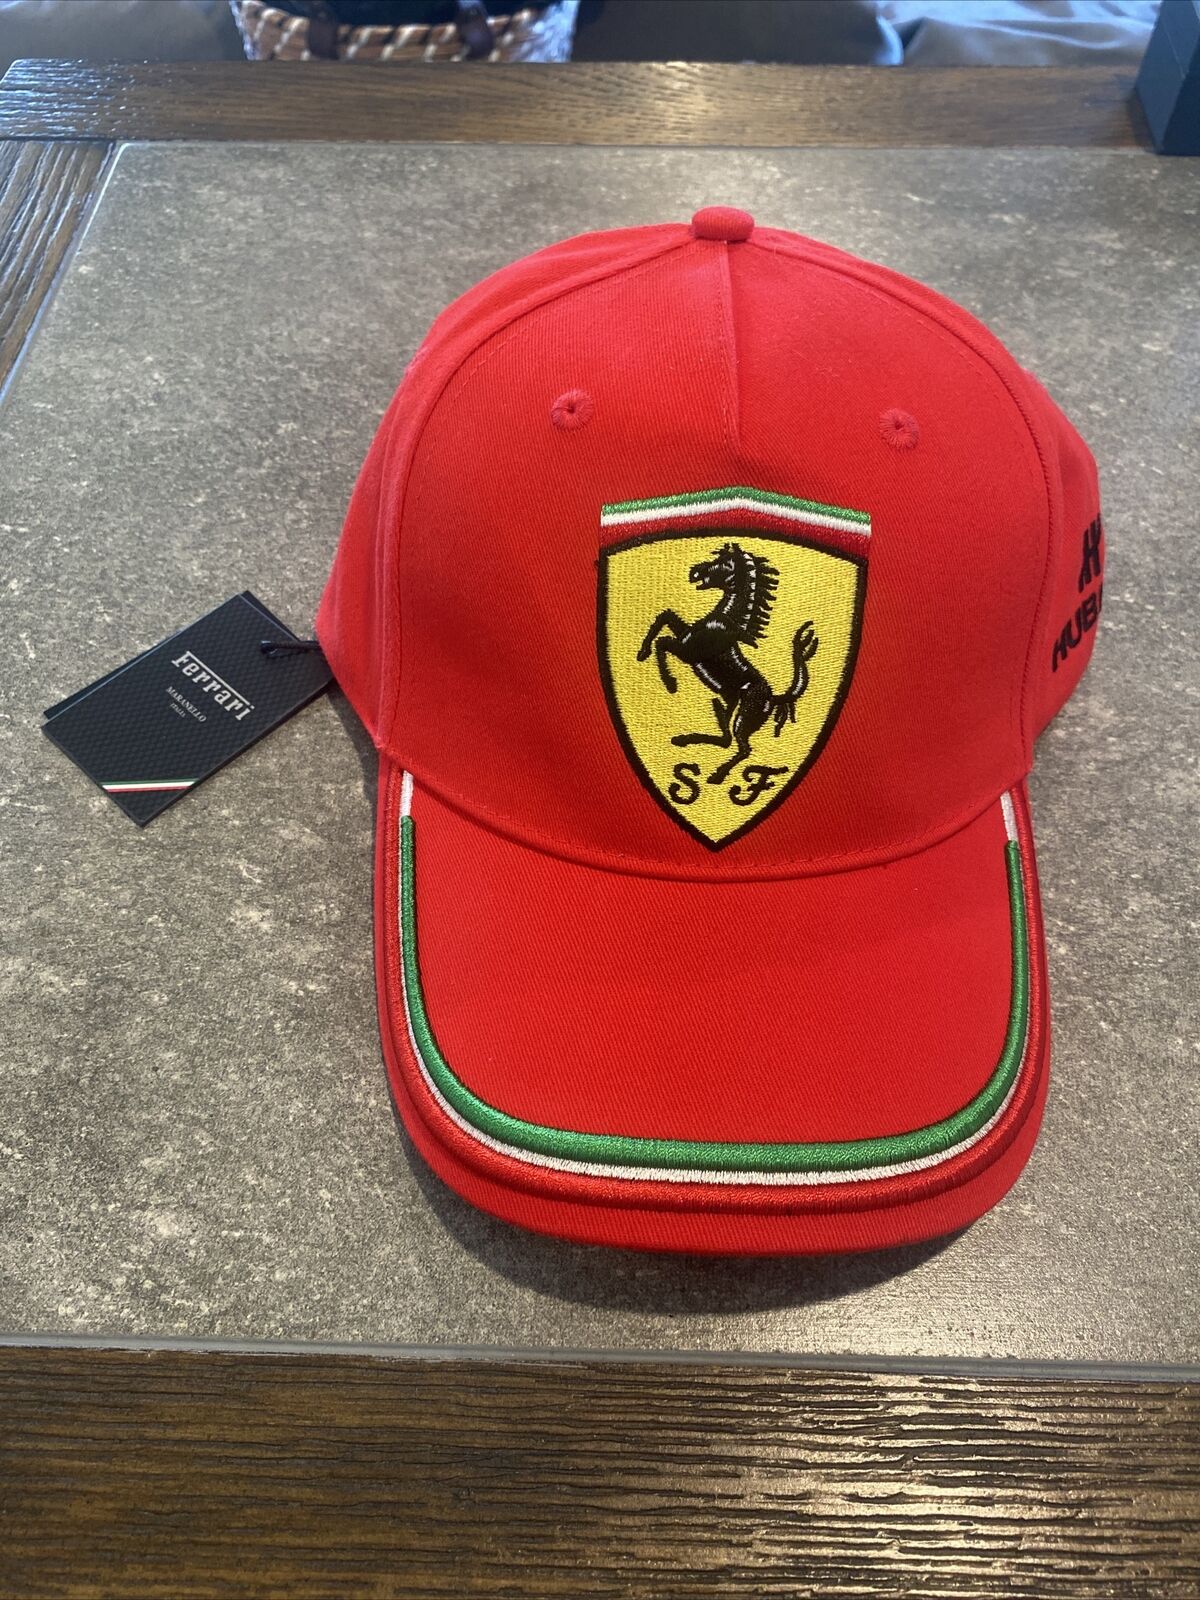 Scuderia Ferrari Official Flag Cap New with tags - Hublot *New*